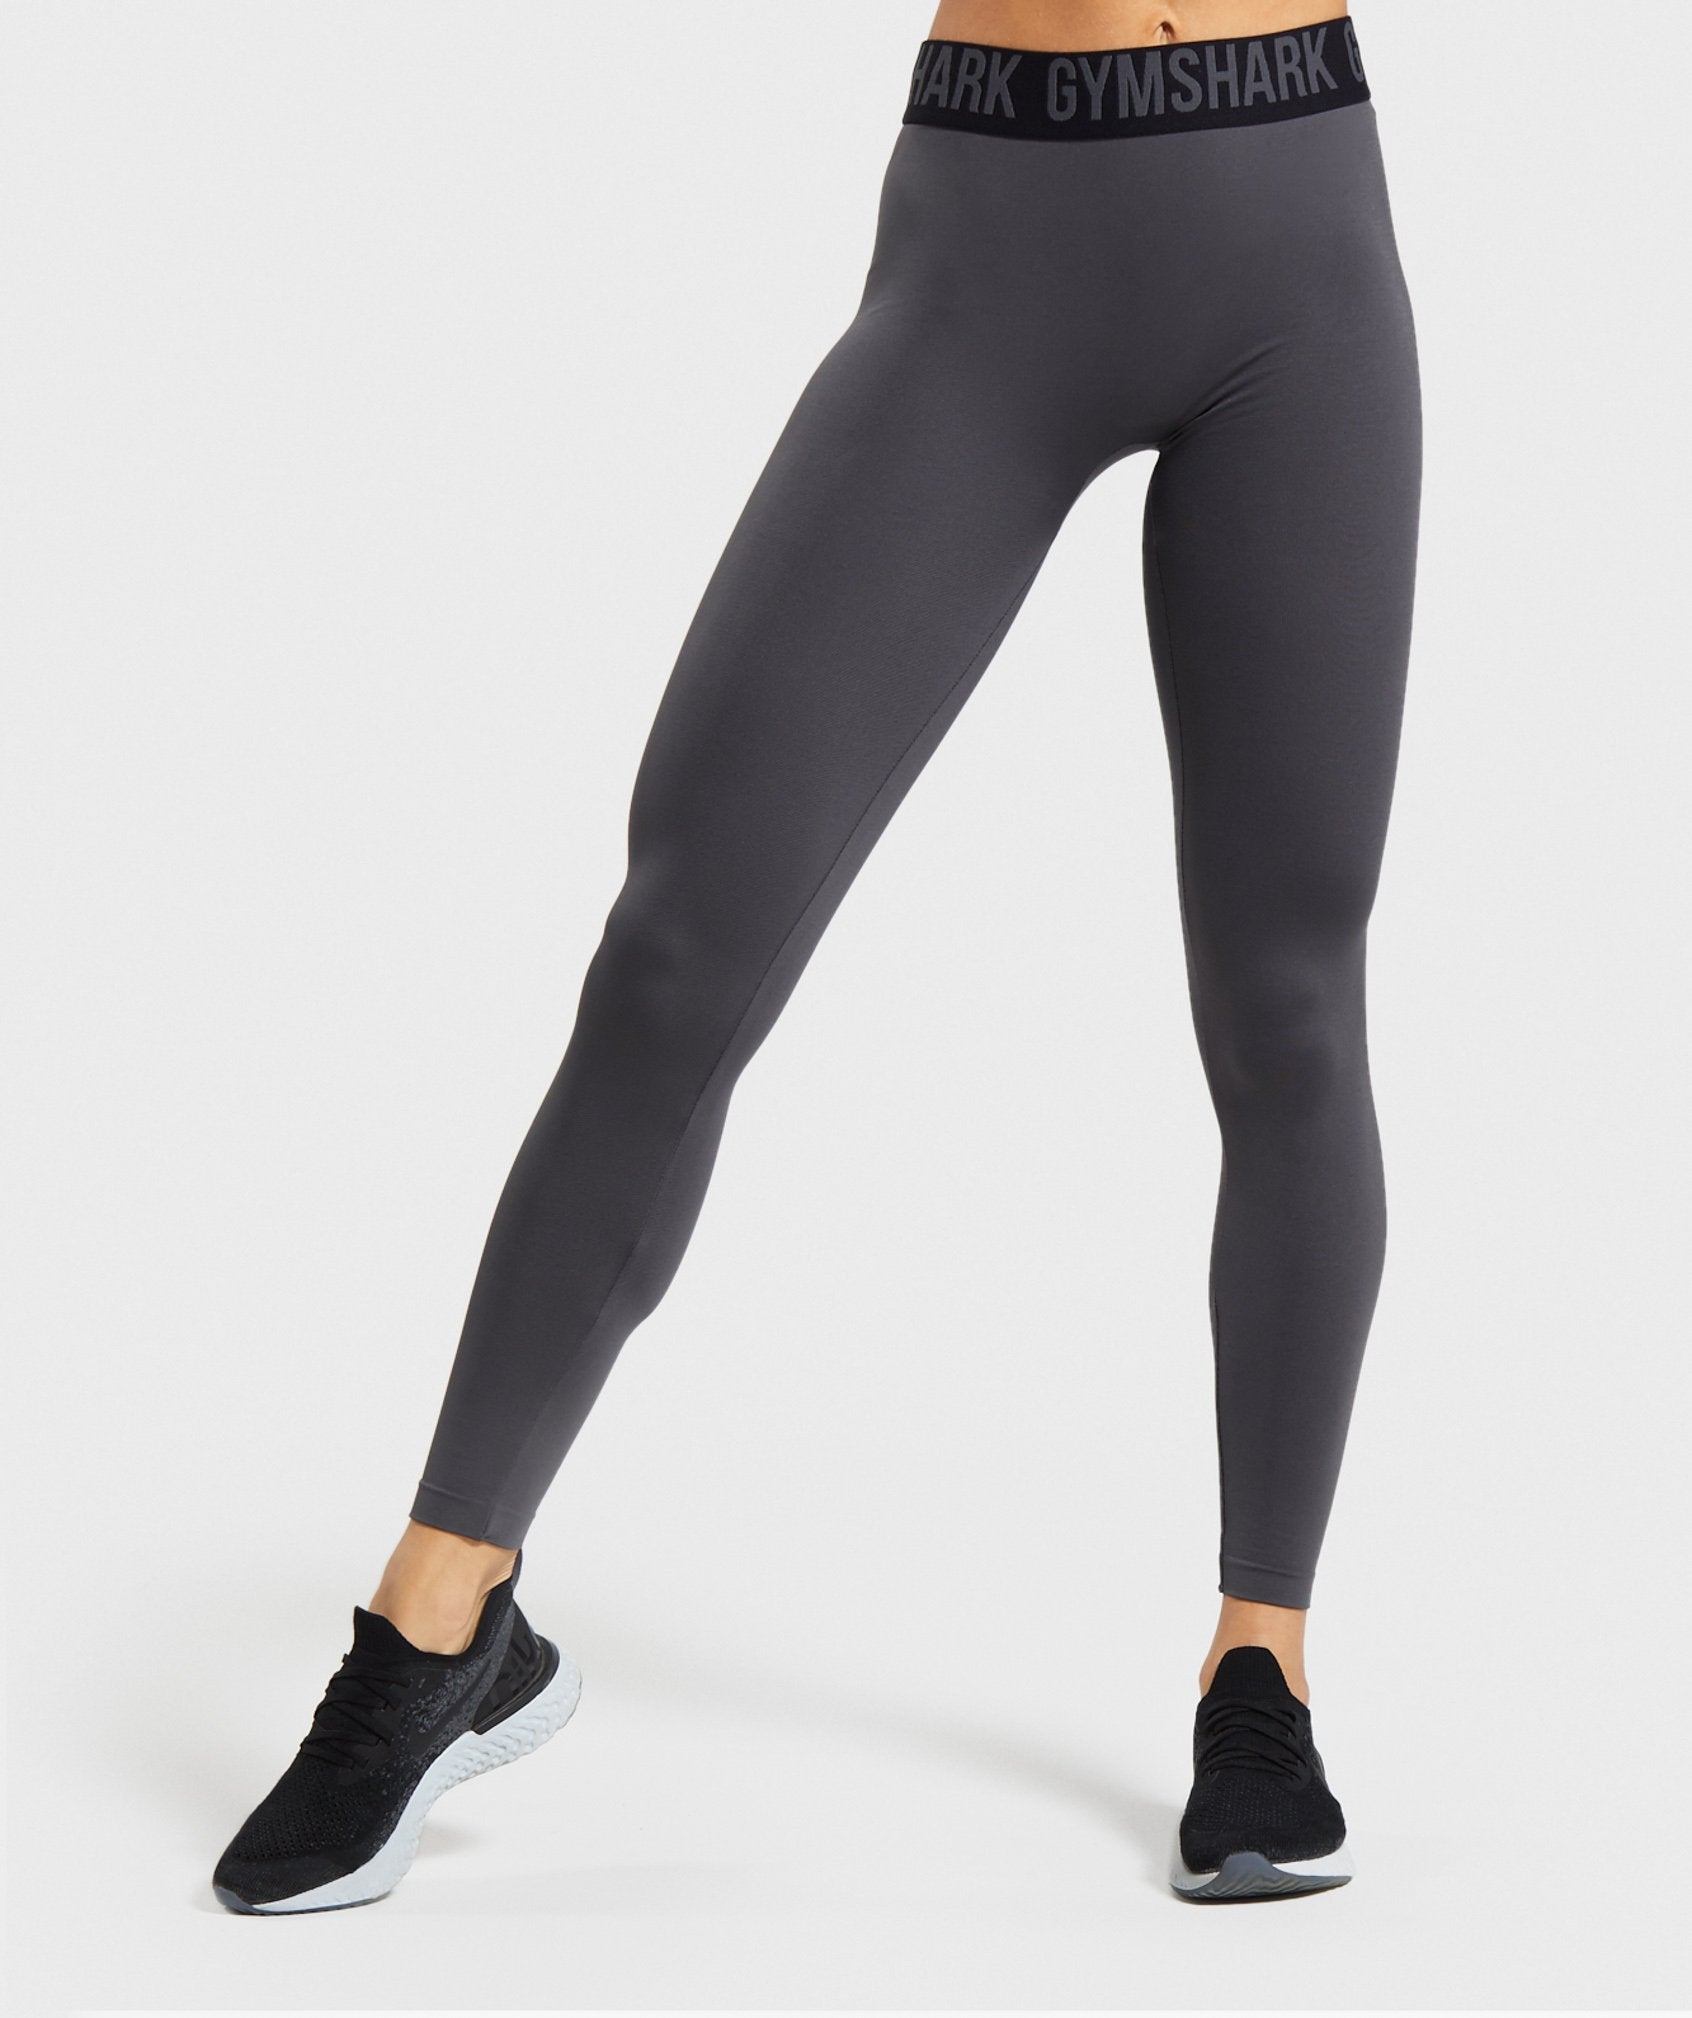 Gymshark Fit Leggings - Charcoal/Black Image A